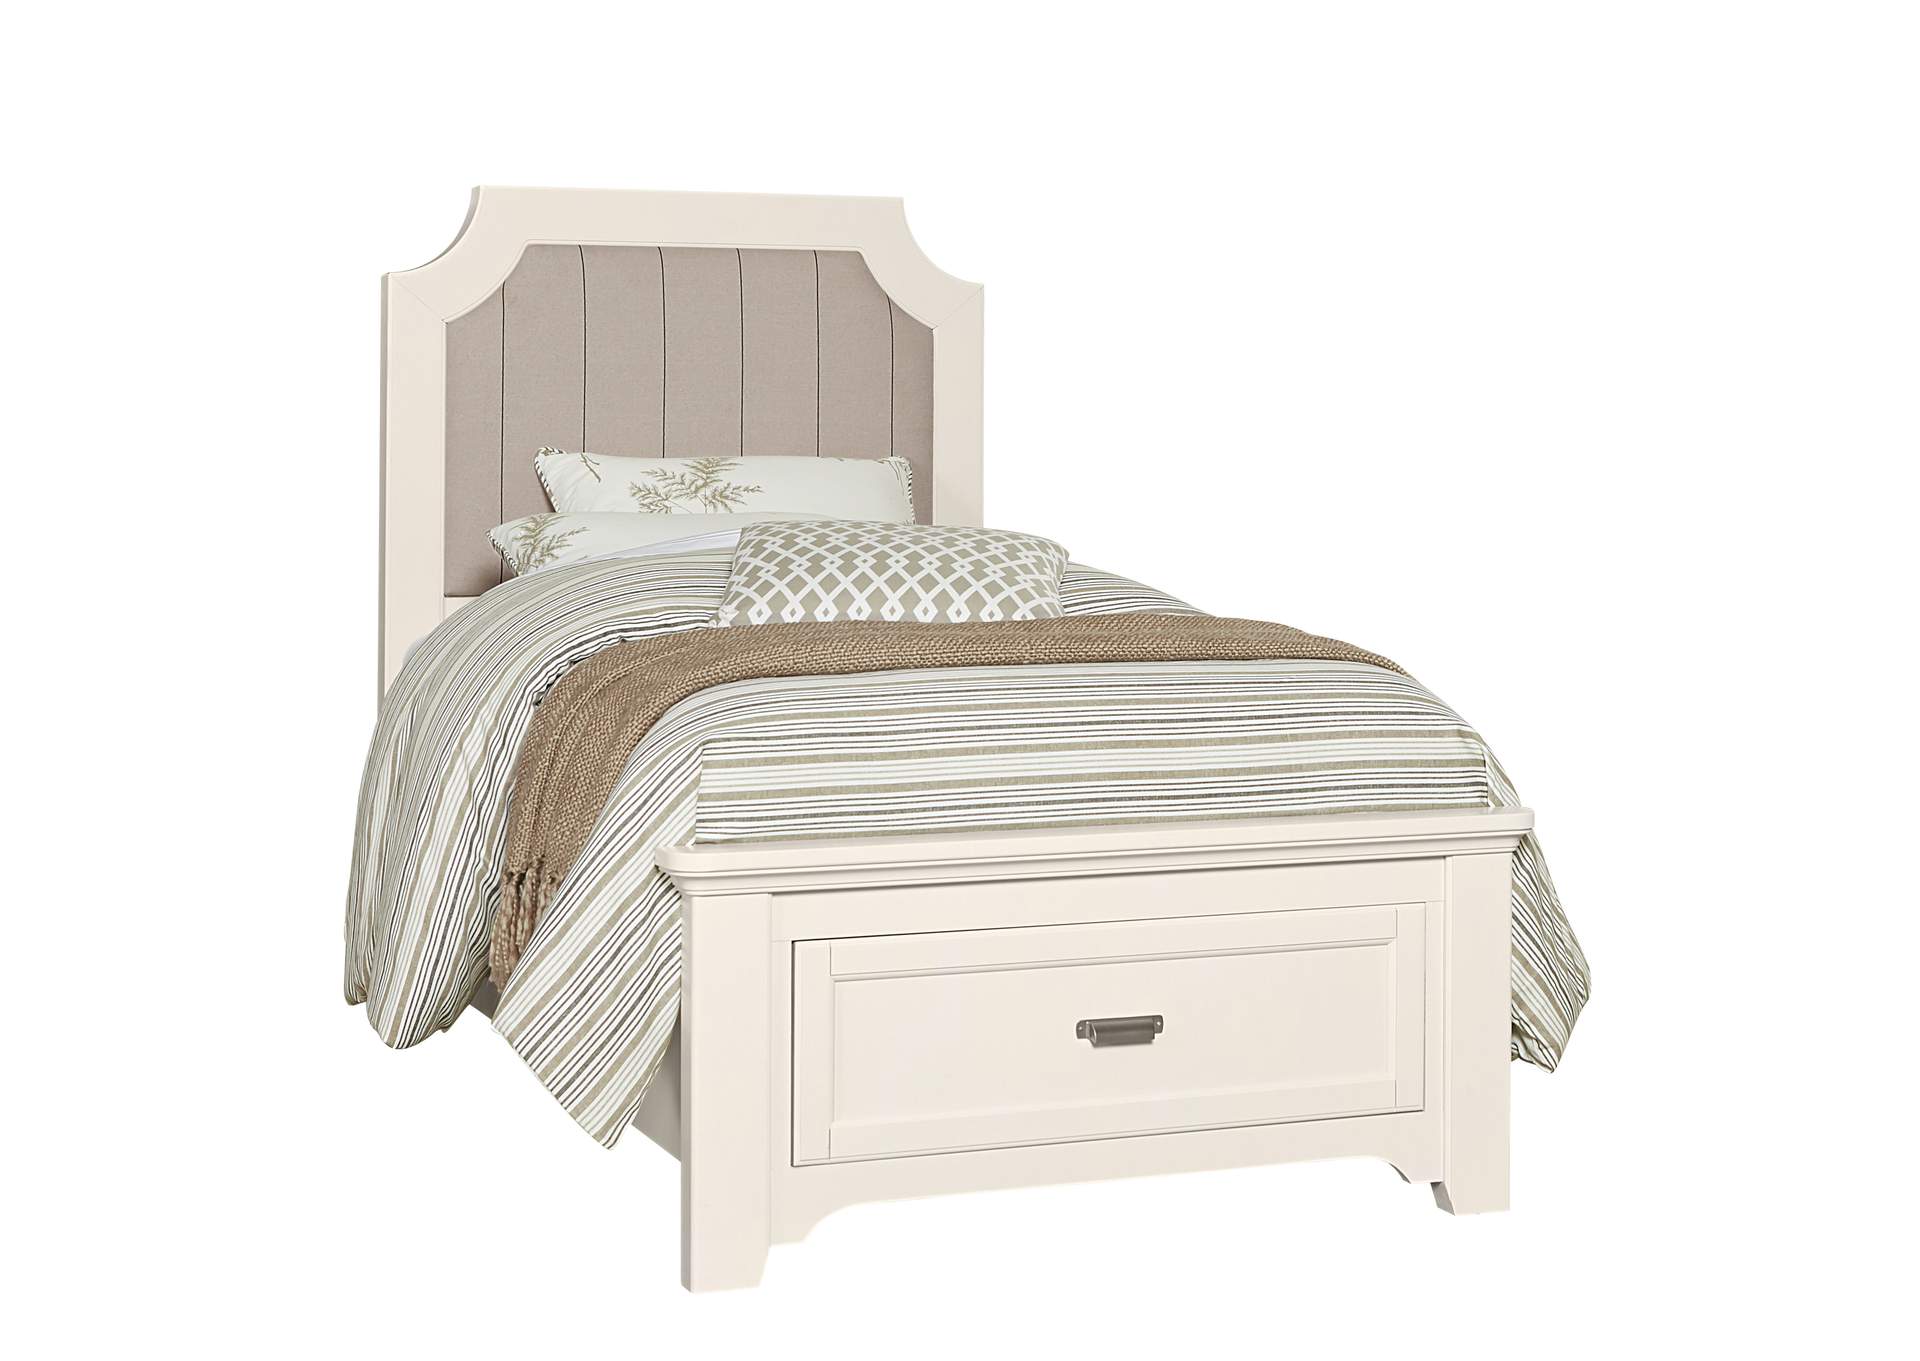 744 - Bungalow-Lattice White Twin Upholstered Bed,Vaughan-Bassett